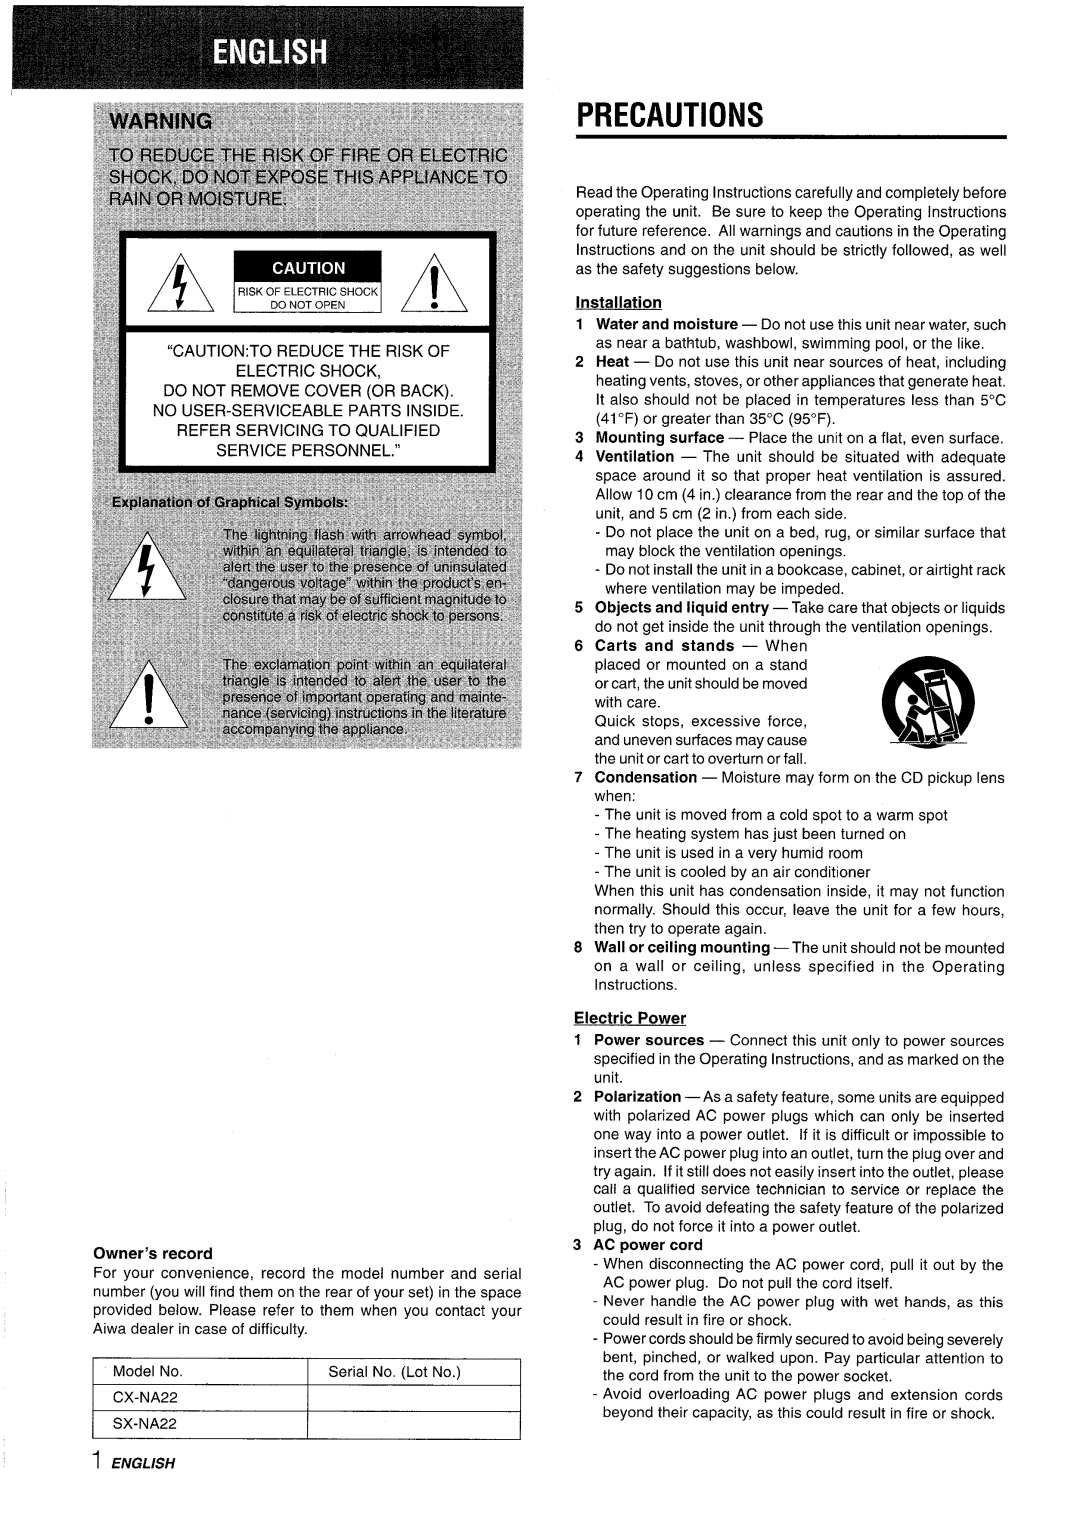 Aiwa CX-NA22 manual Precautions, English 